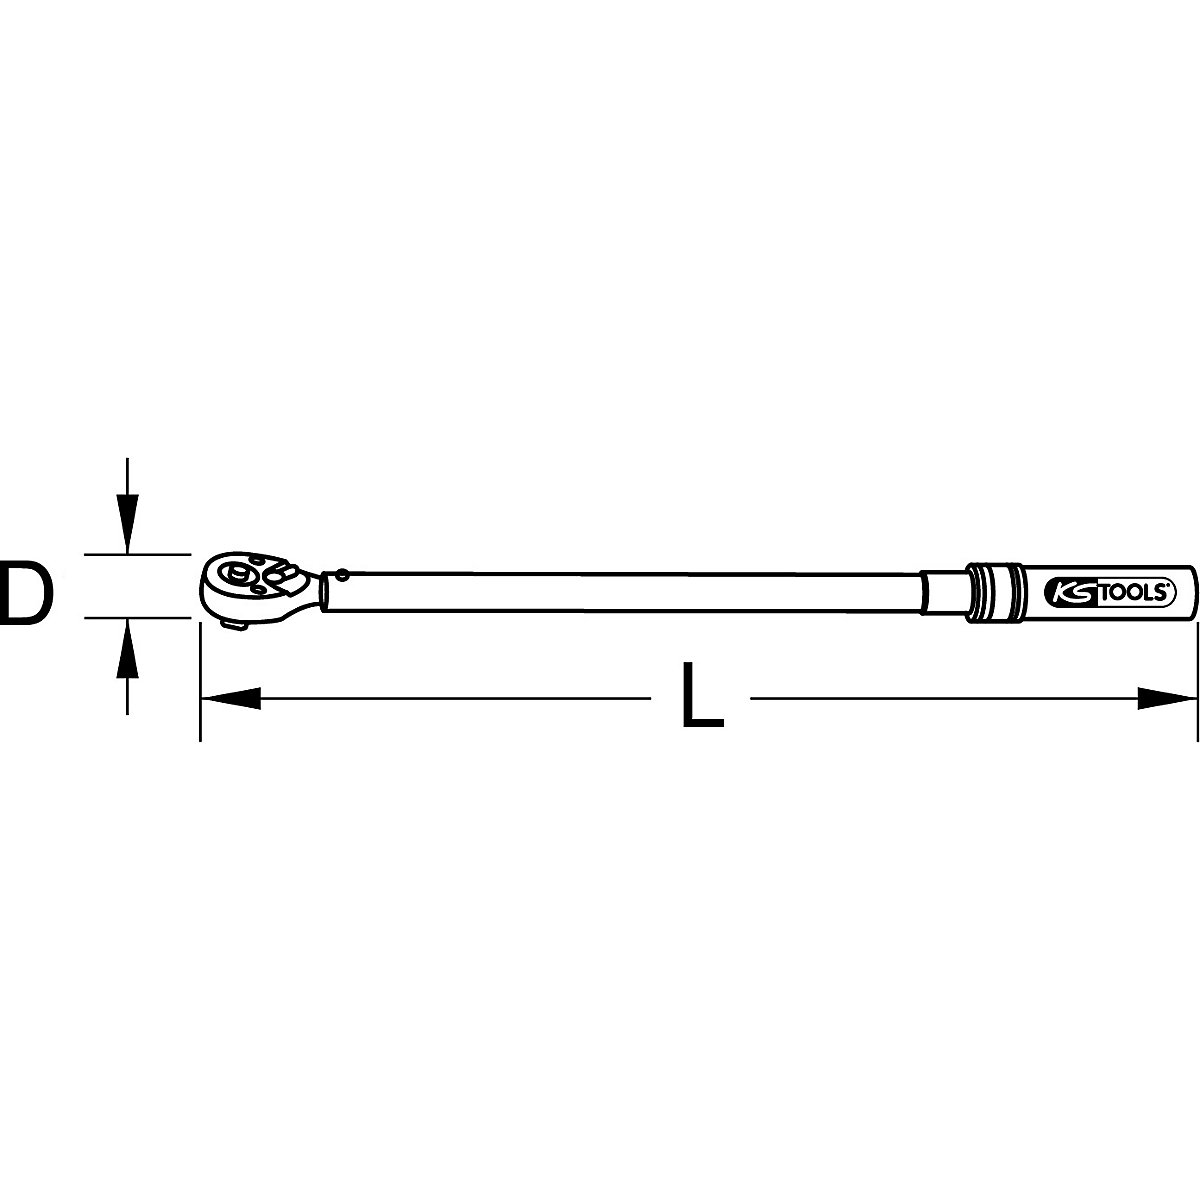 Llave dinamométrica industrial, reversible – KS Tools (Imagen del producto 7)-6